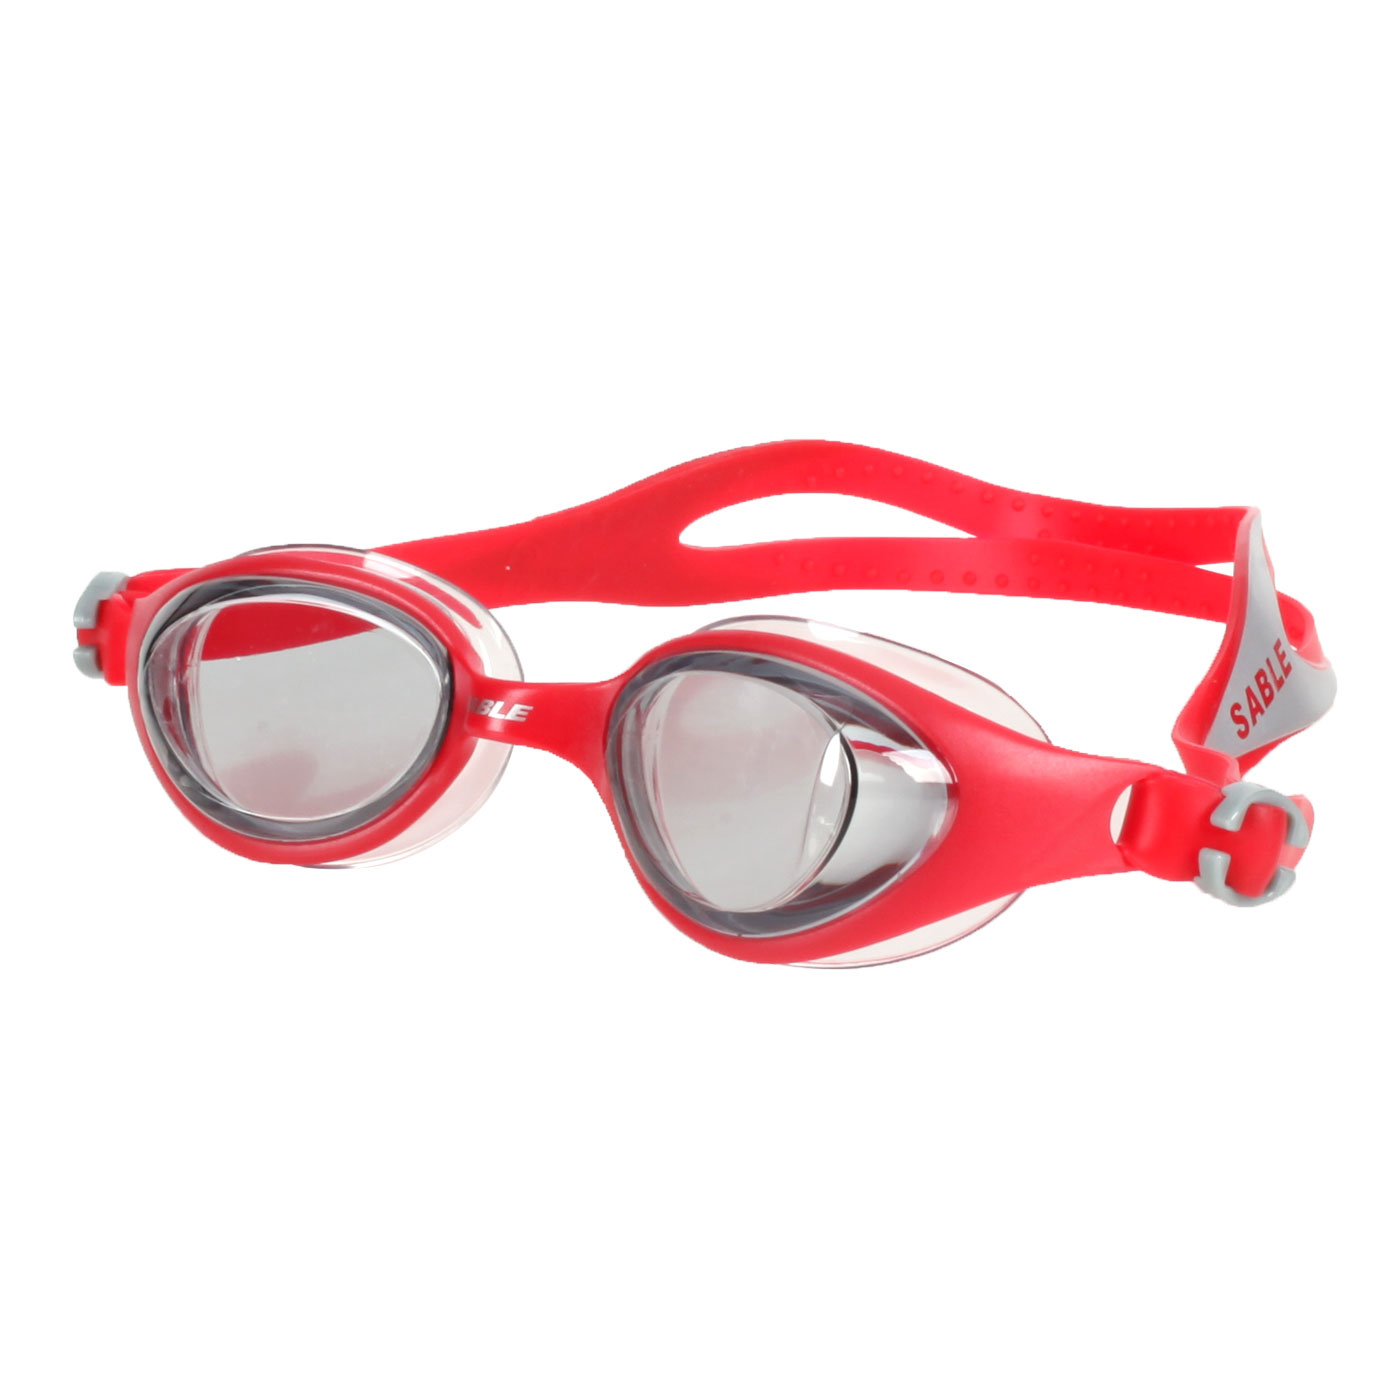 SABLE 平光兒童泳鏡-勇者英雄  206C6 - 紅銀